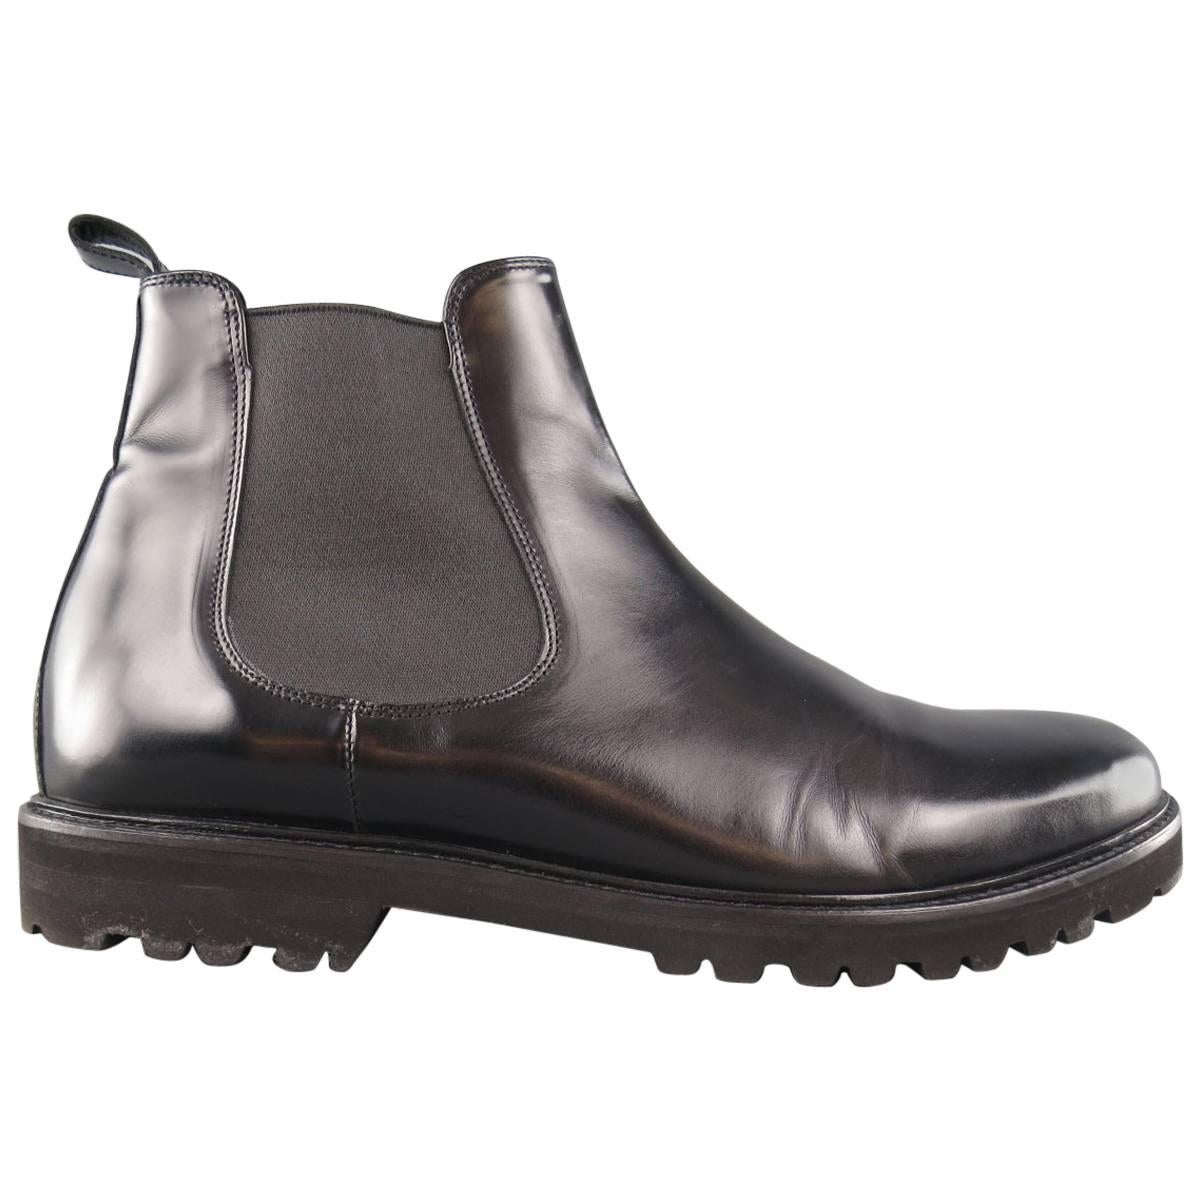 Men's THEORY Ankle Boots - US 12 Schwarz Solide Leder Schuhe